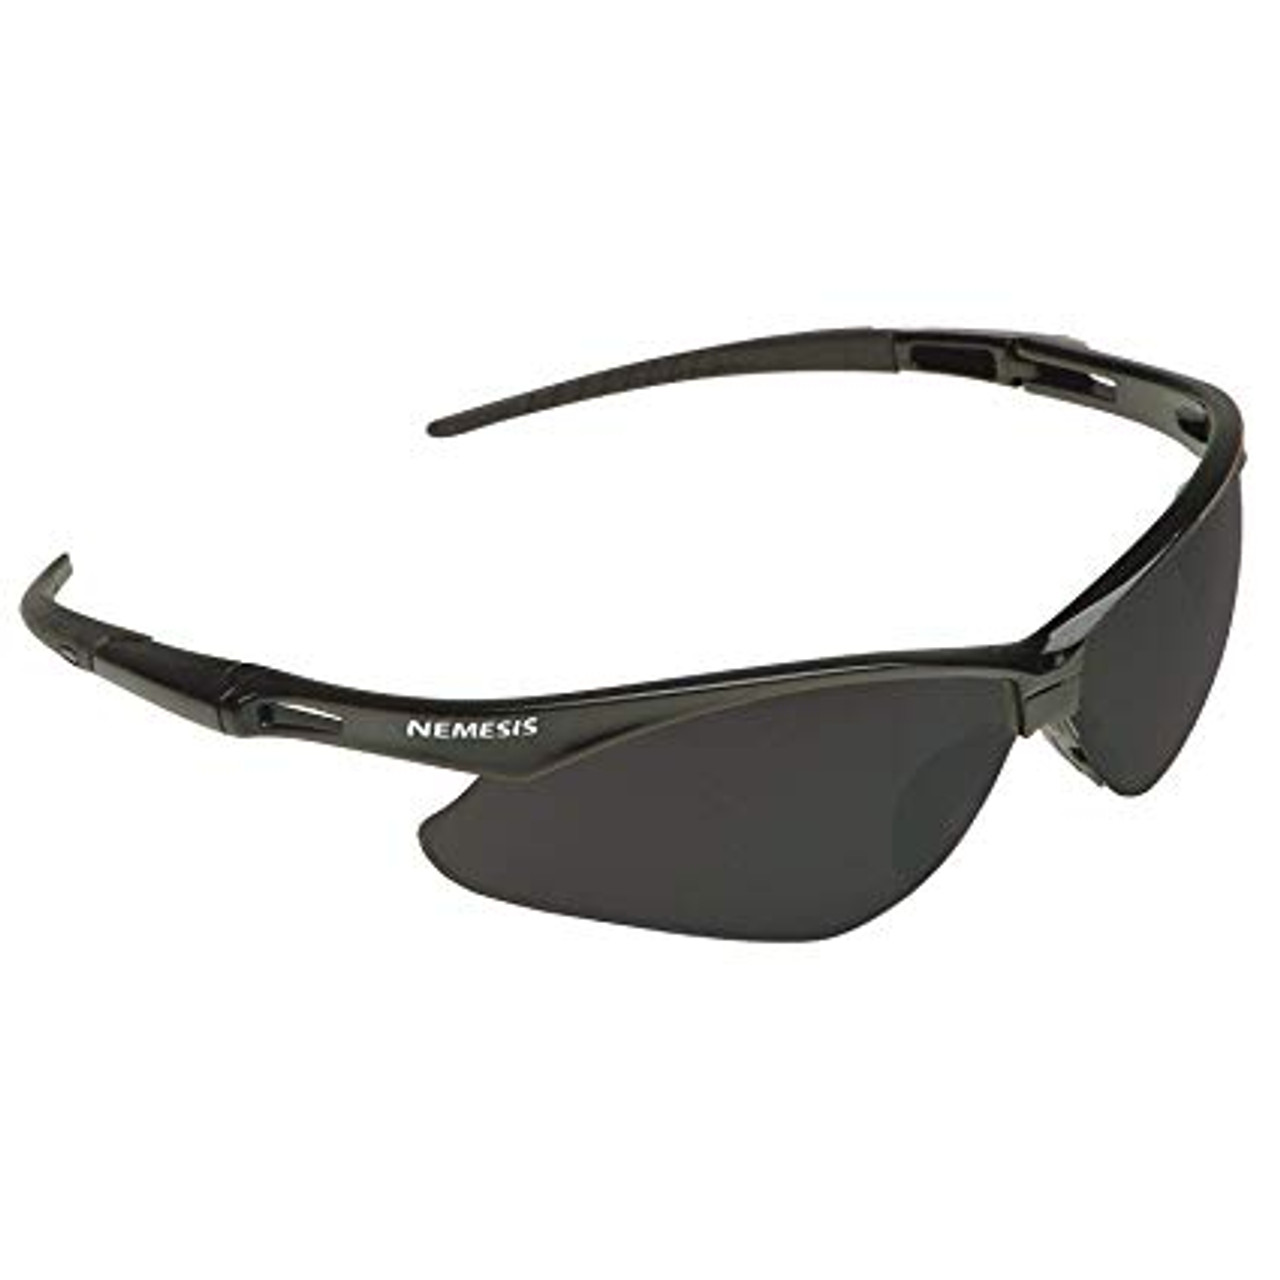 Kleenguard 25688 Nemesis Safety Glasses Black Frame Smoke Mirror